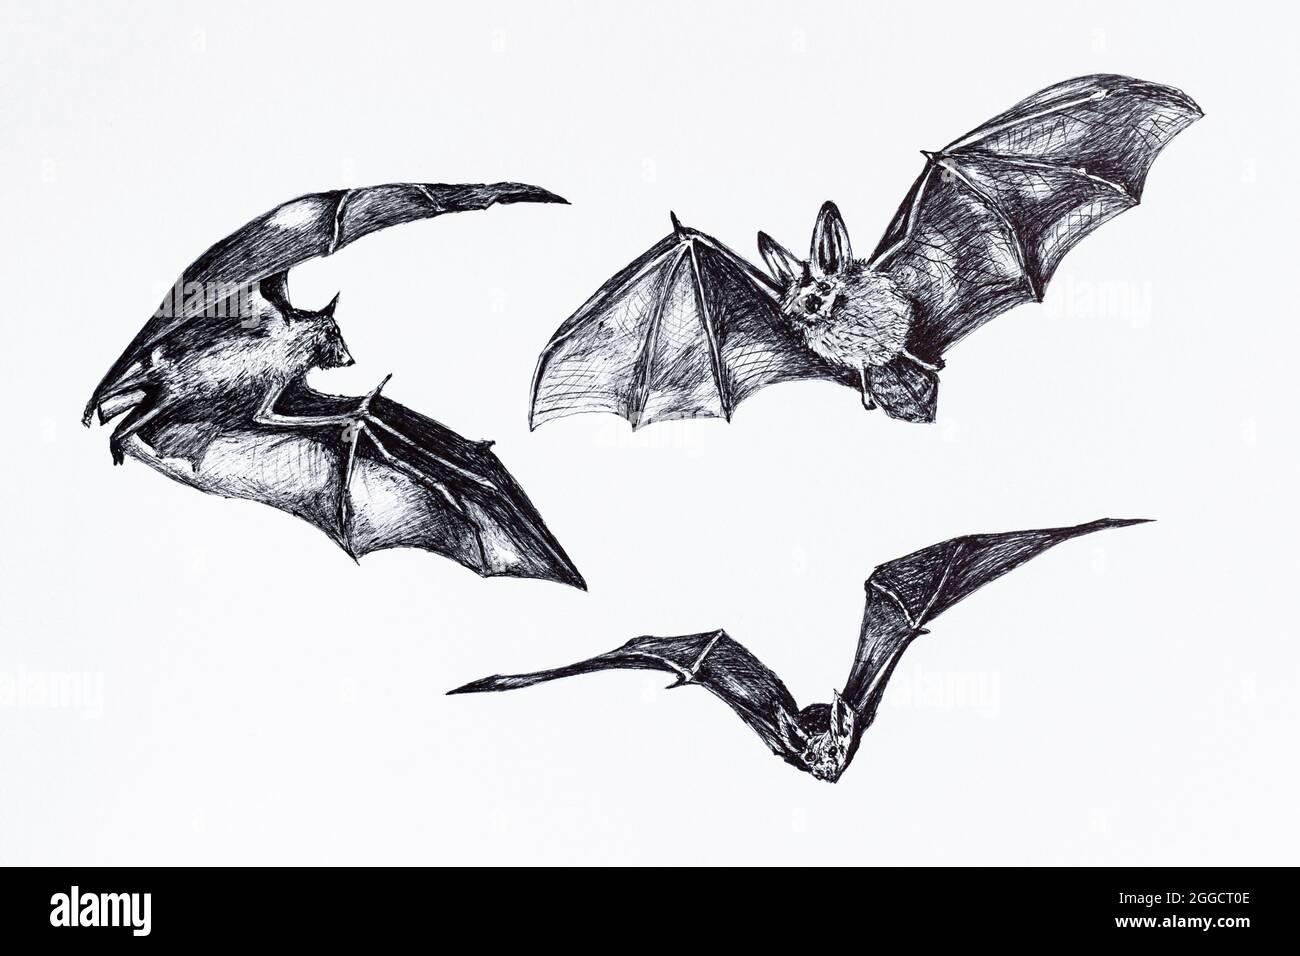 How to Draw a Bat Vampire Bat  YouTube